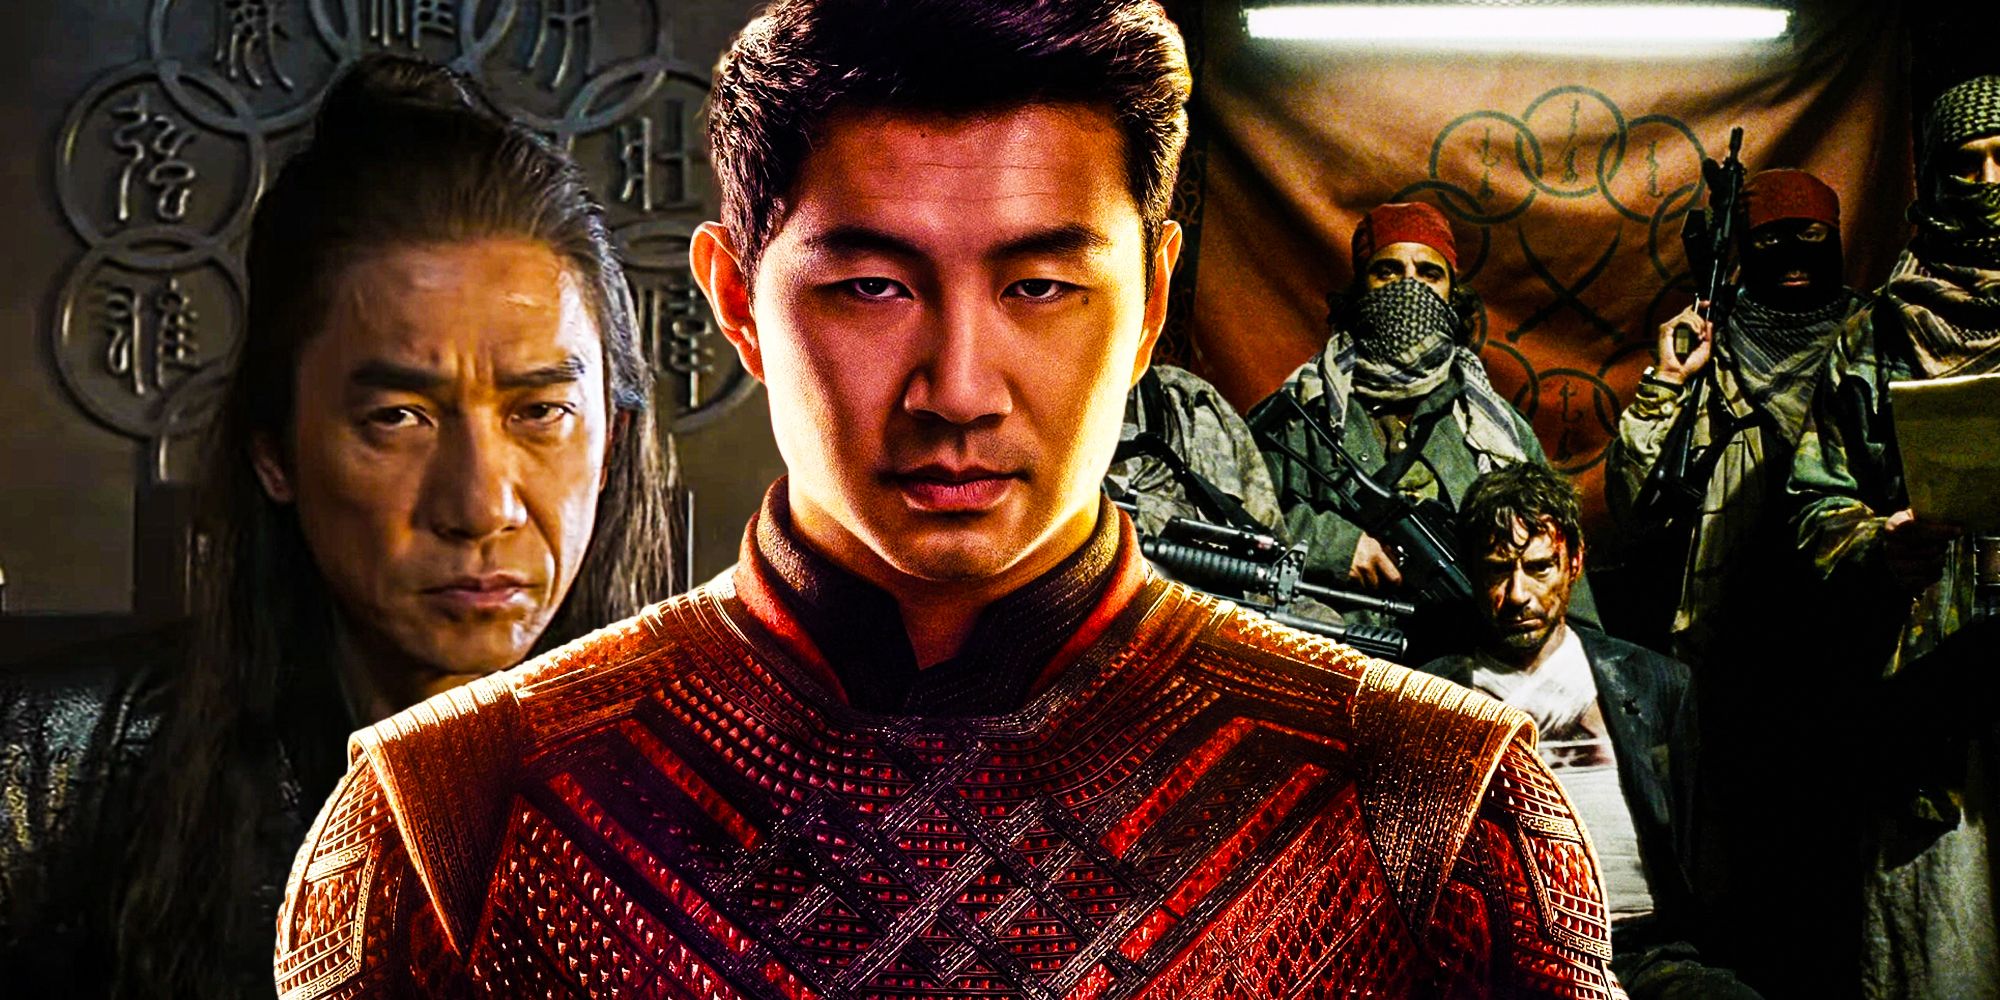 Imagen dividida de Wenwu, Shang-Chi y Ten Rings capturando a Iron Man